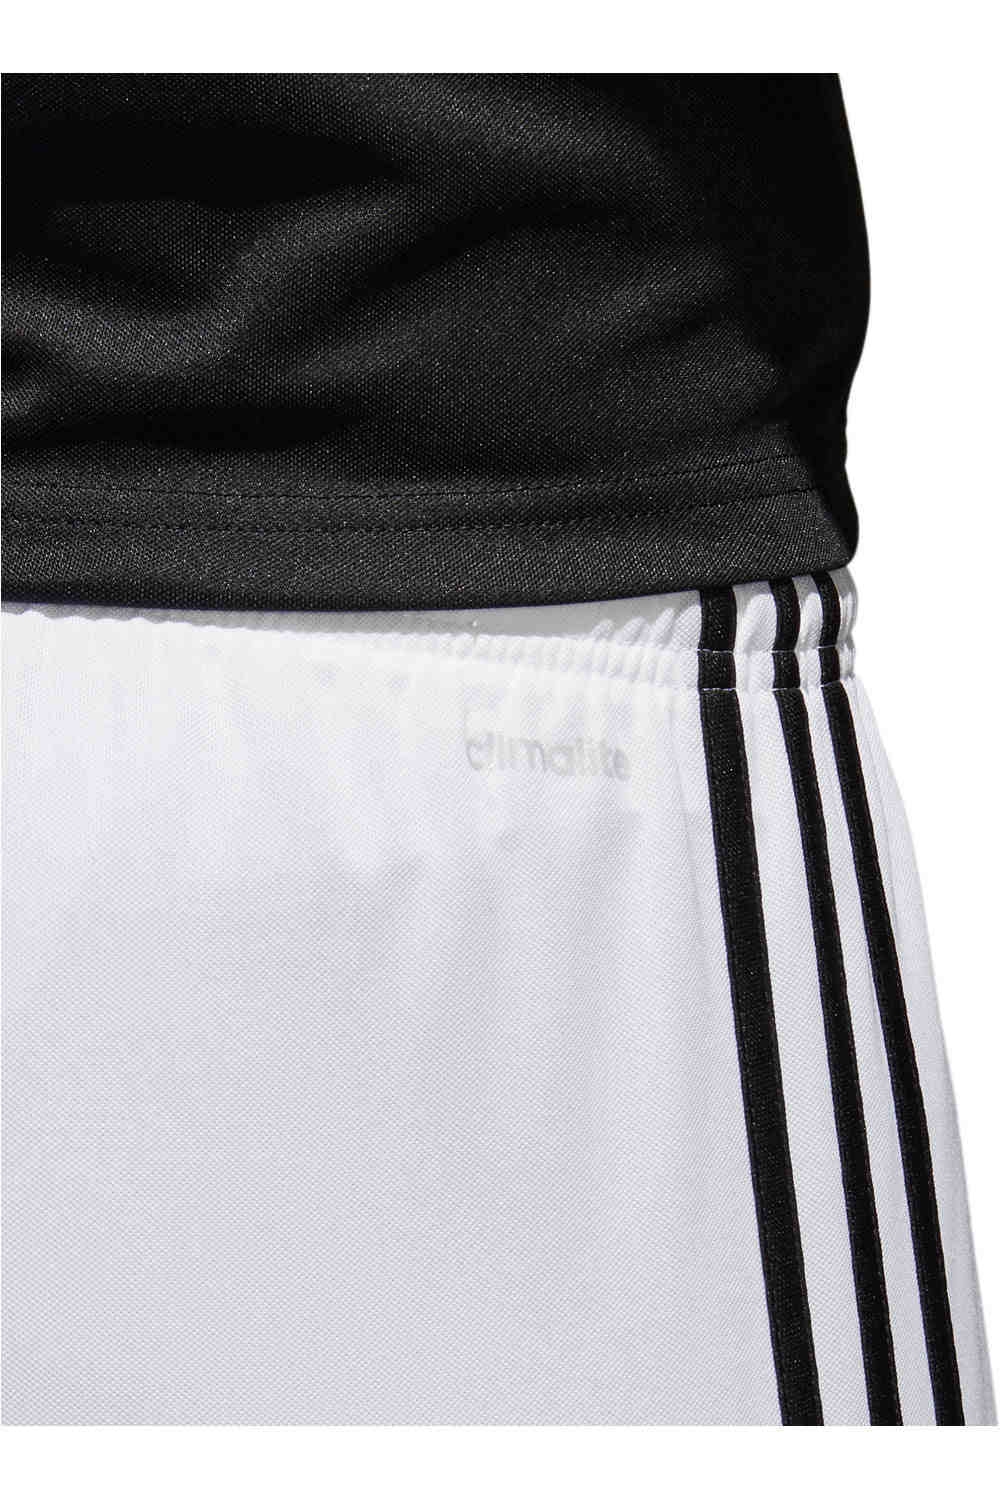 adidas pantalones cortos futbol niño SQUAD 17 SHO vista detalle